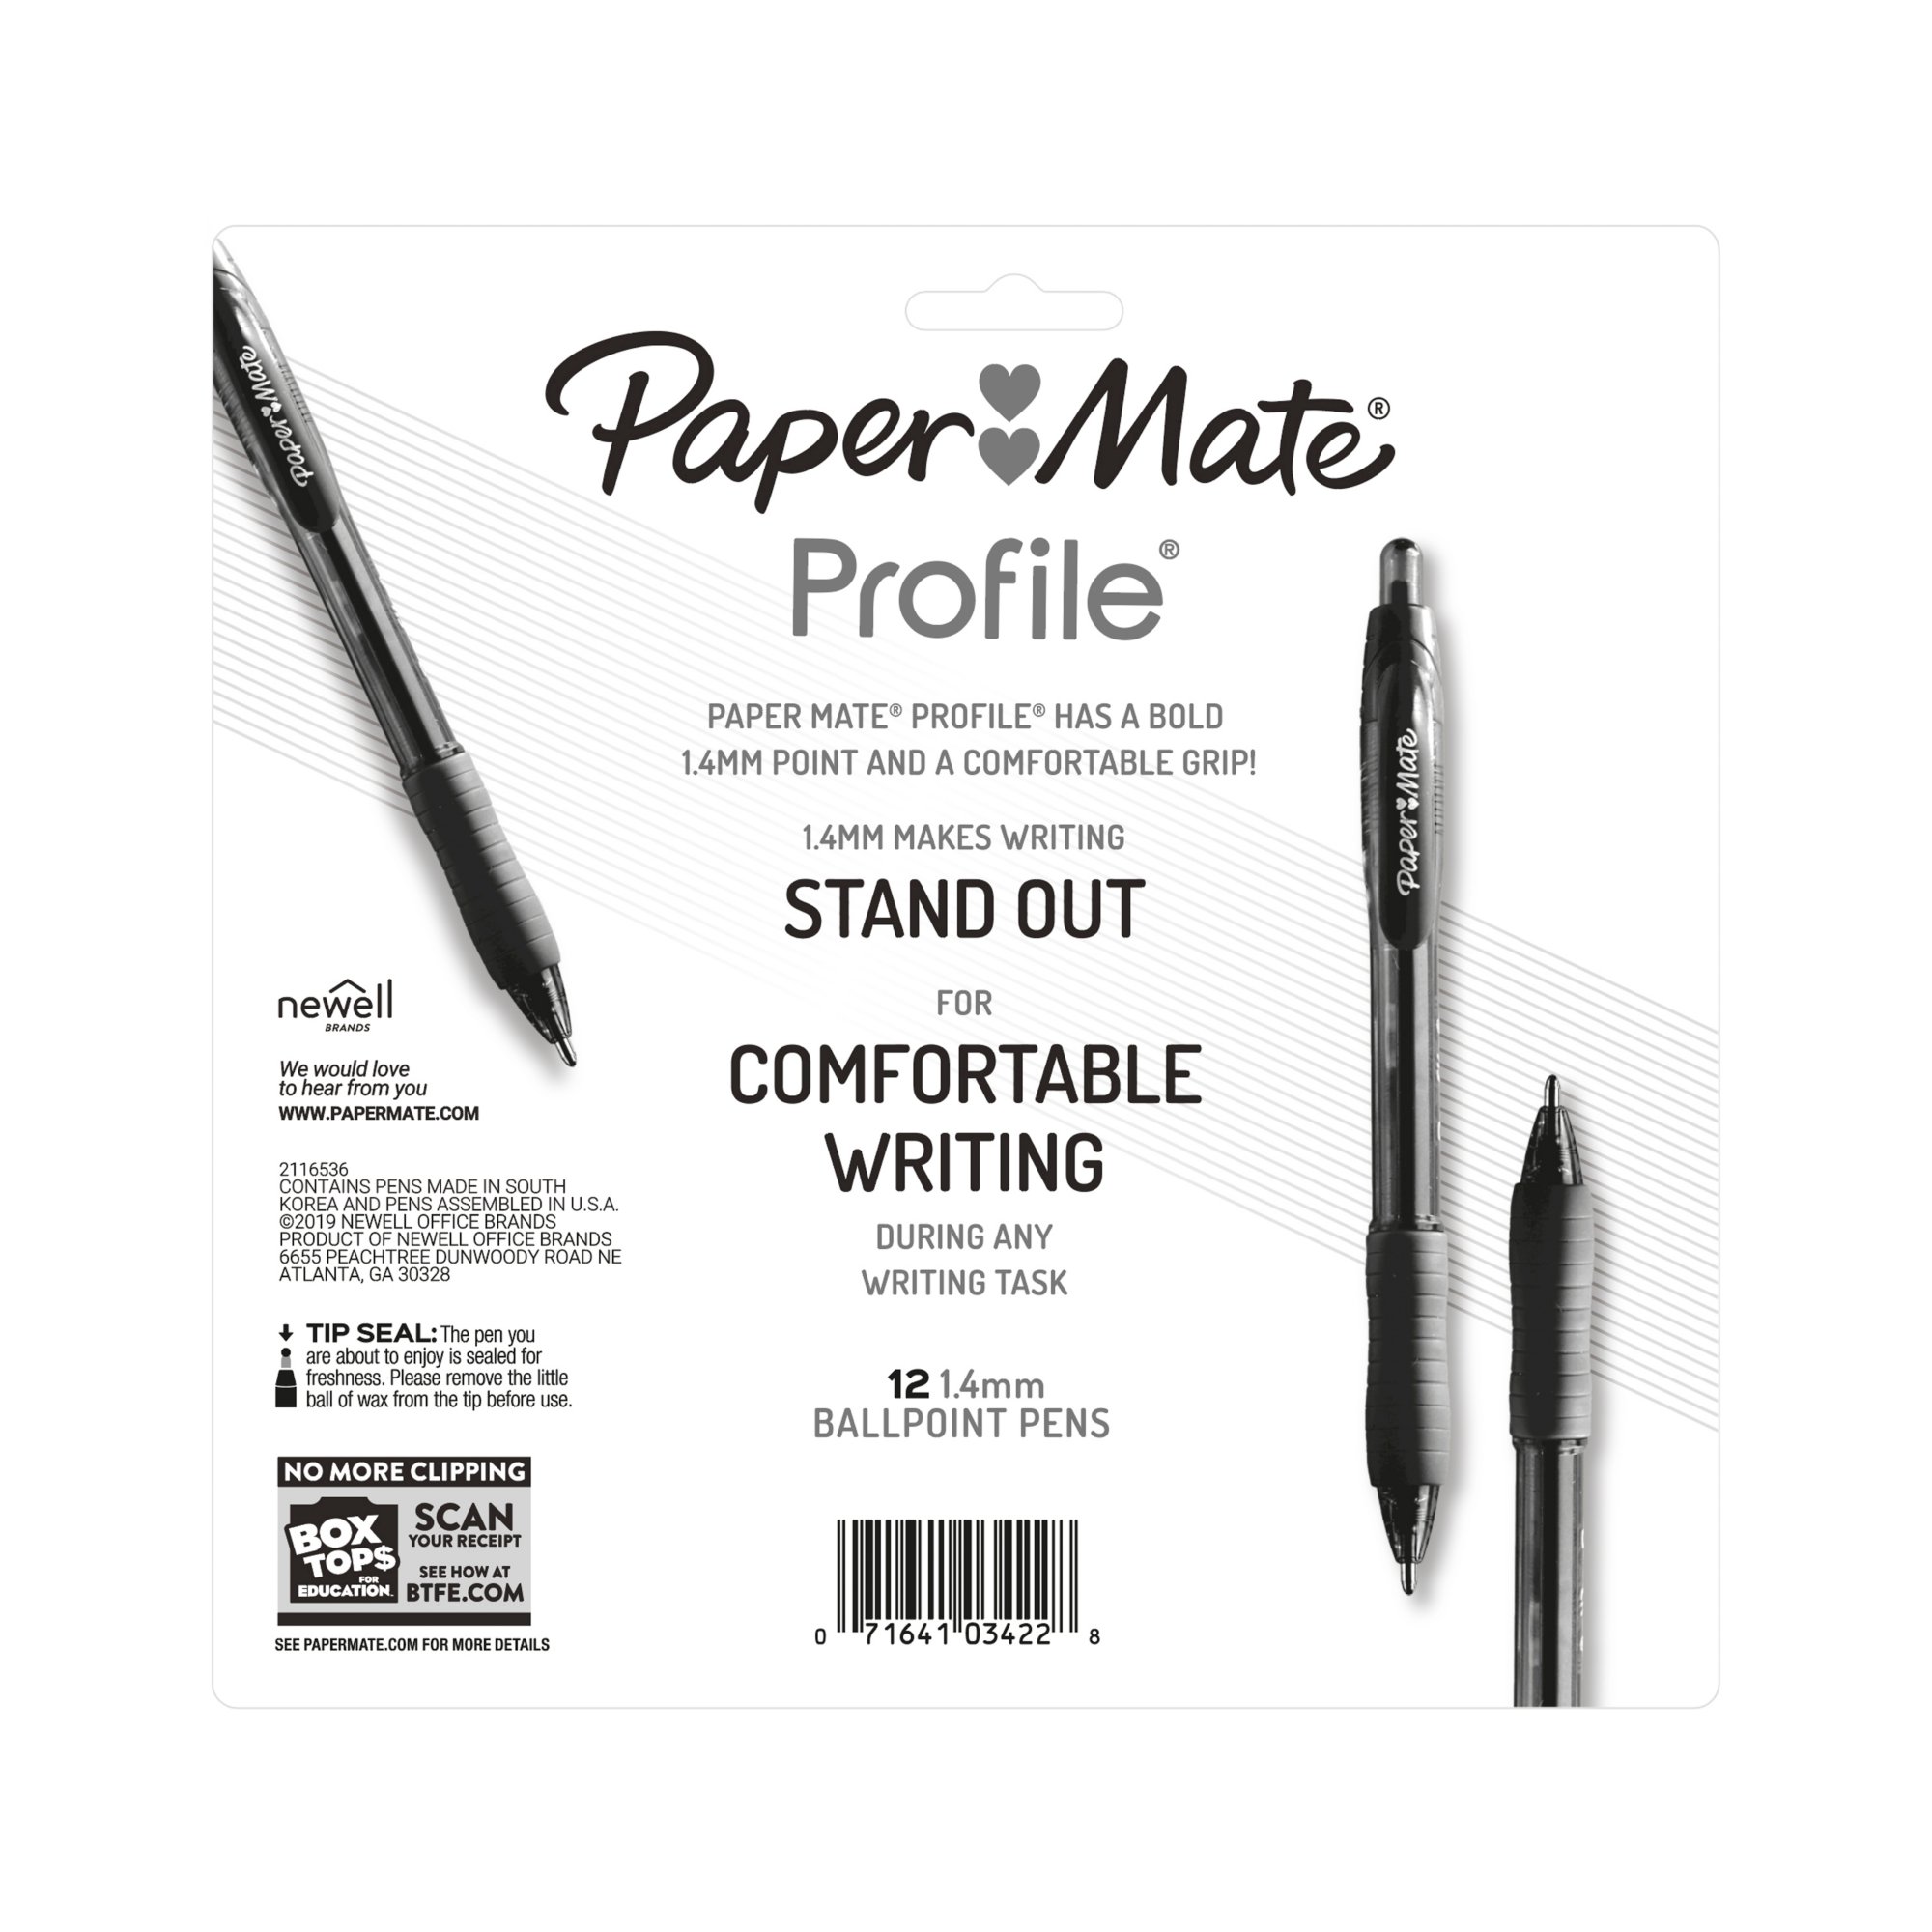 Paper Mate Black Coloring Marker